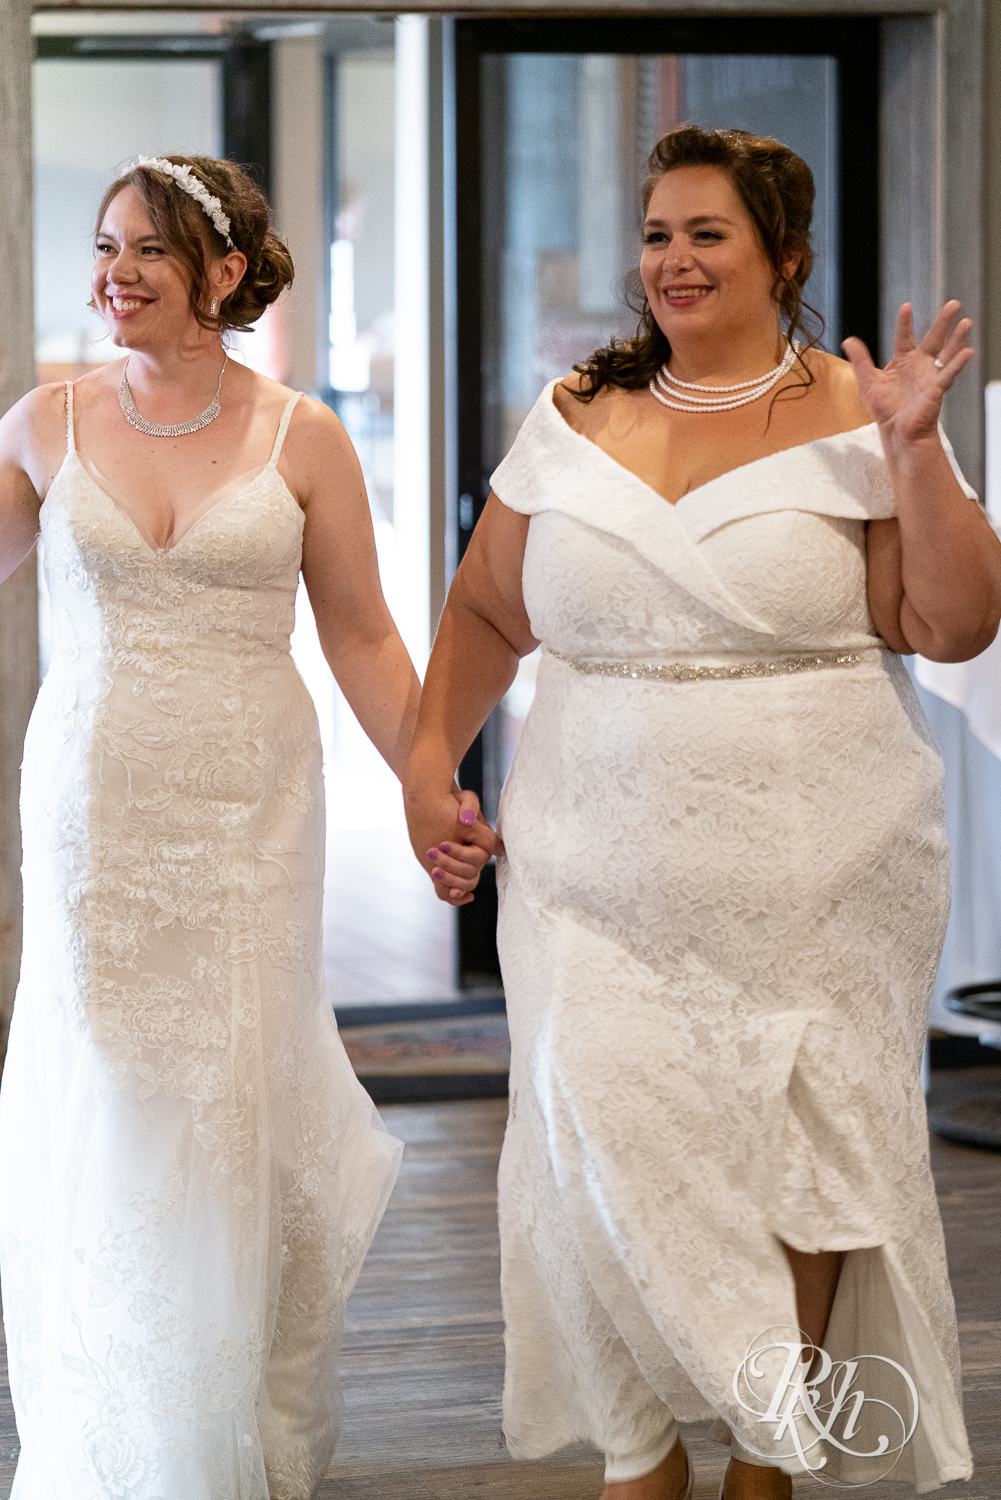 Lesbian brides enter wedding reception at Willy McCoy's in Champlin, Minnesota.